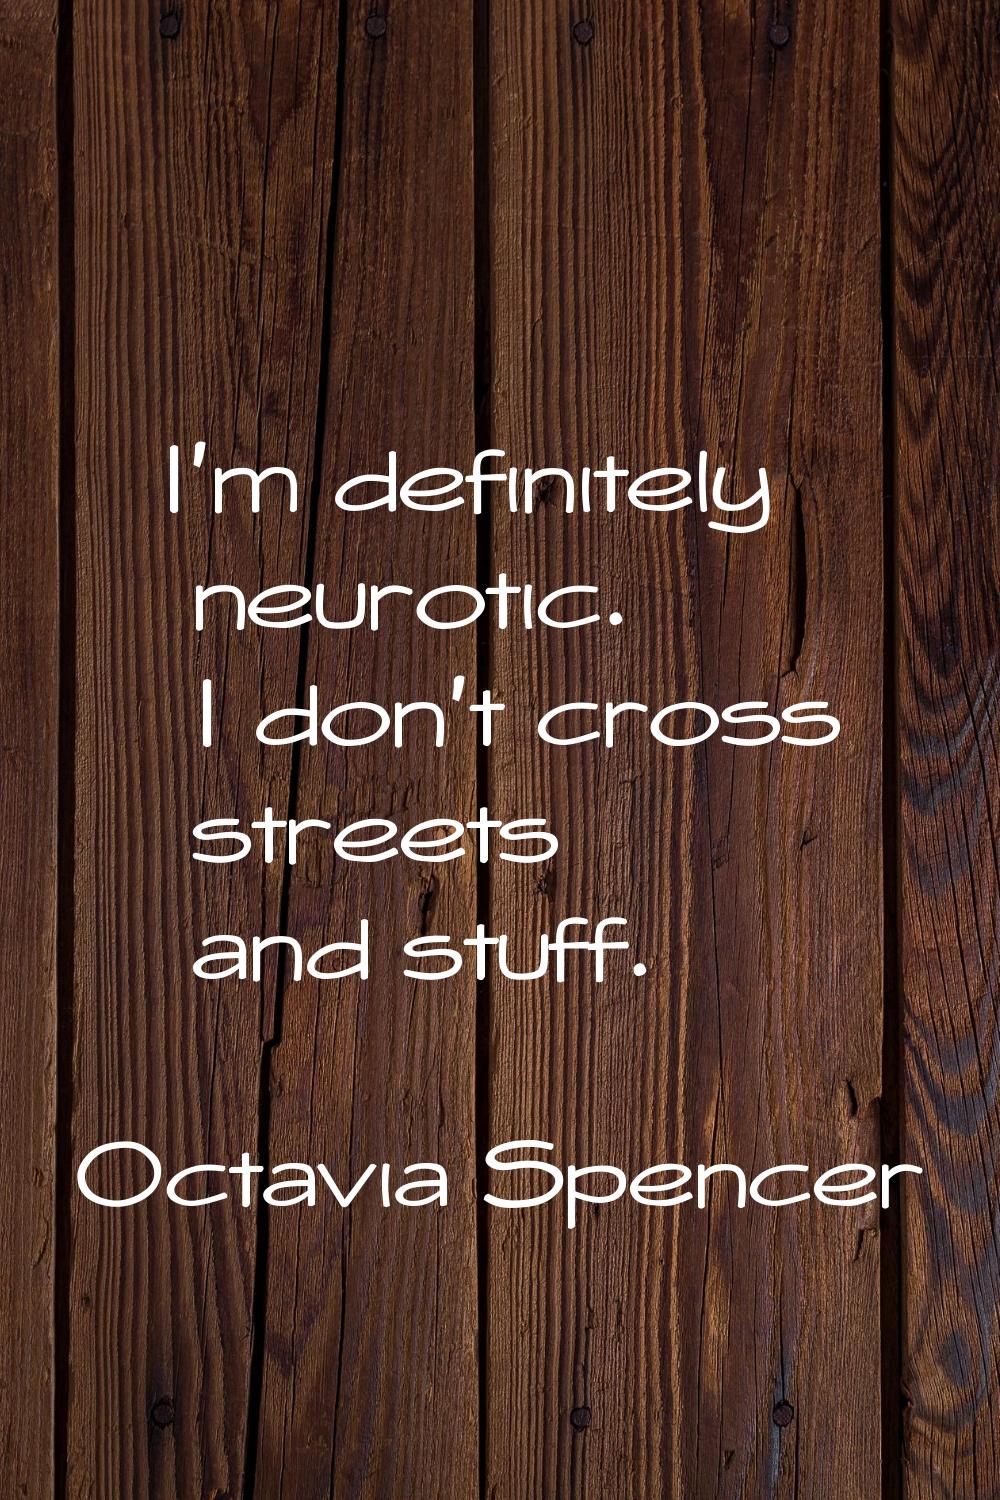 I'm definitely neurotic. I don't cross streets and stuff.